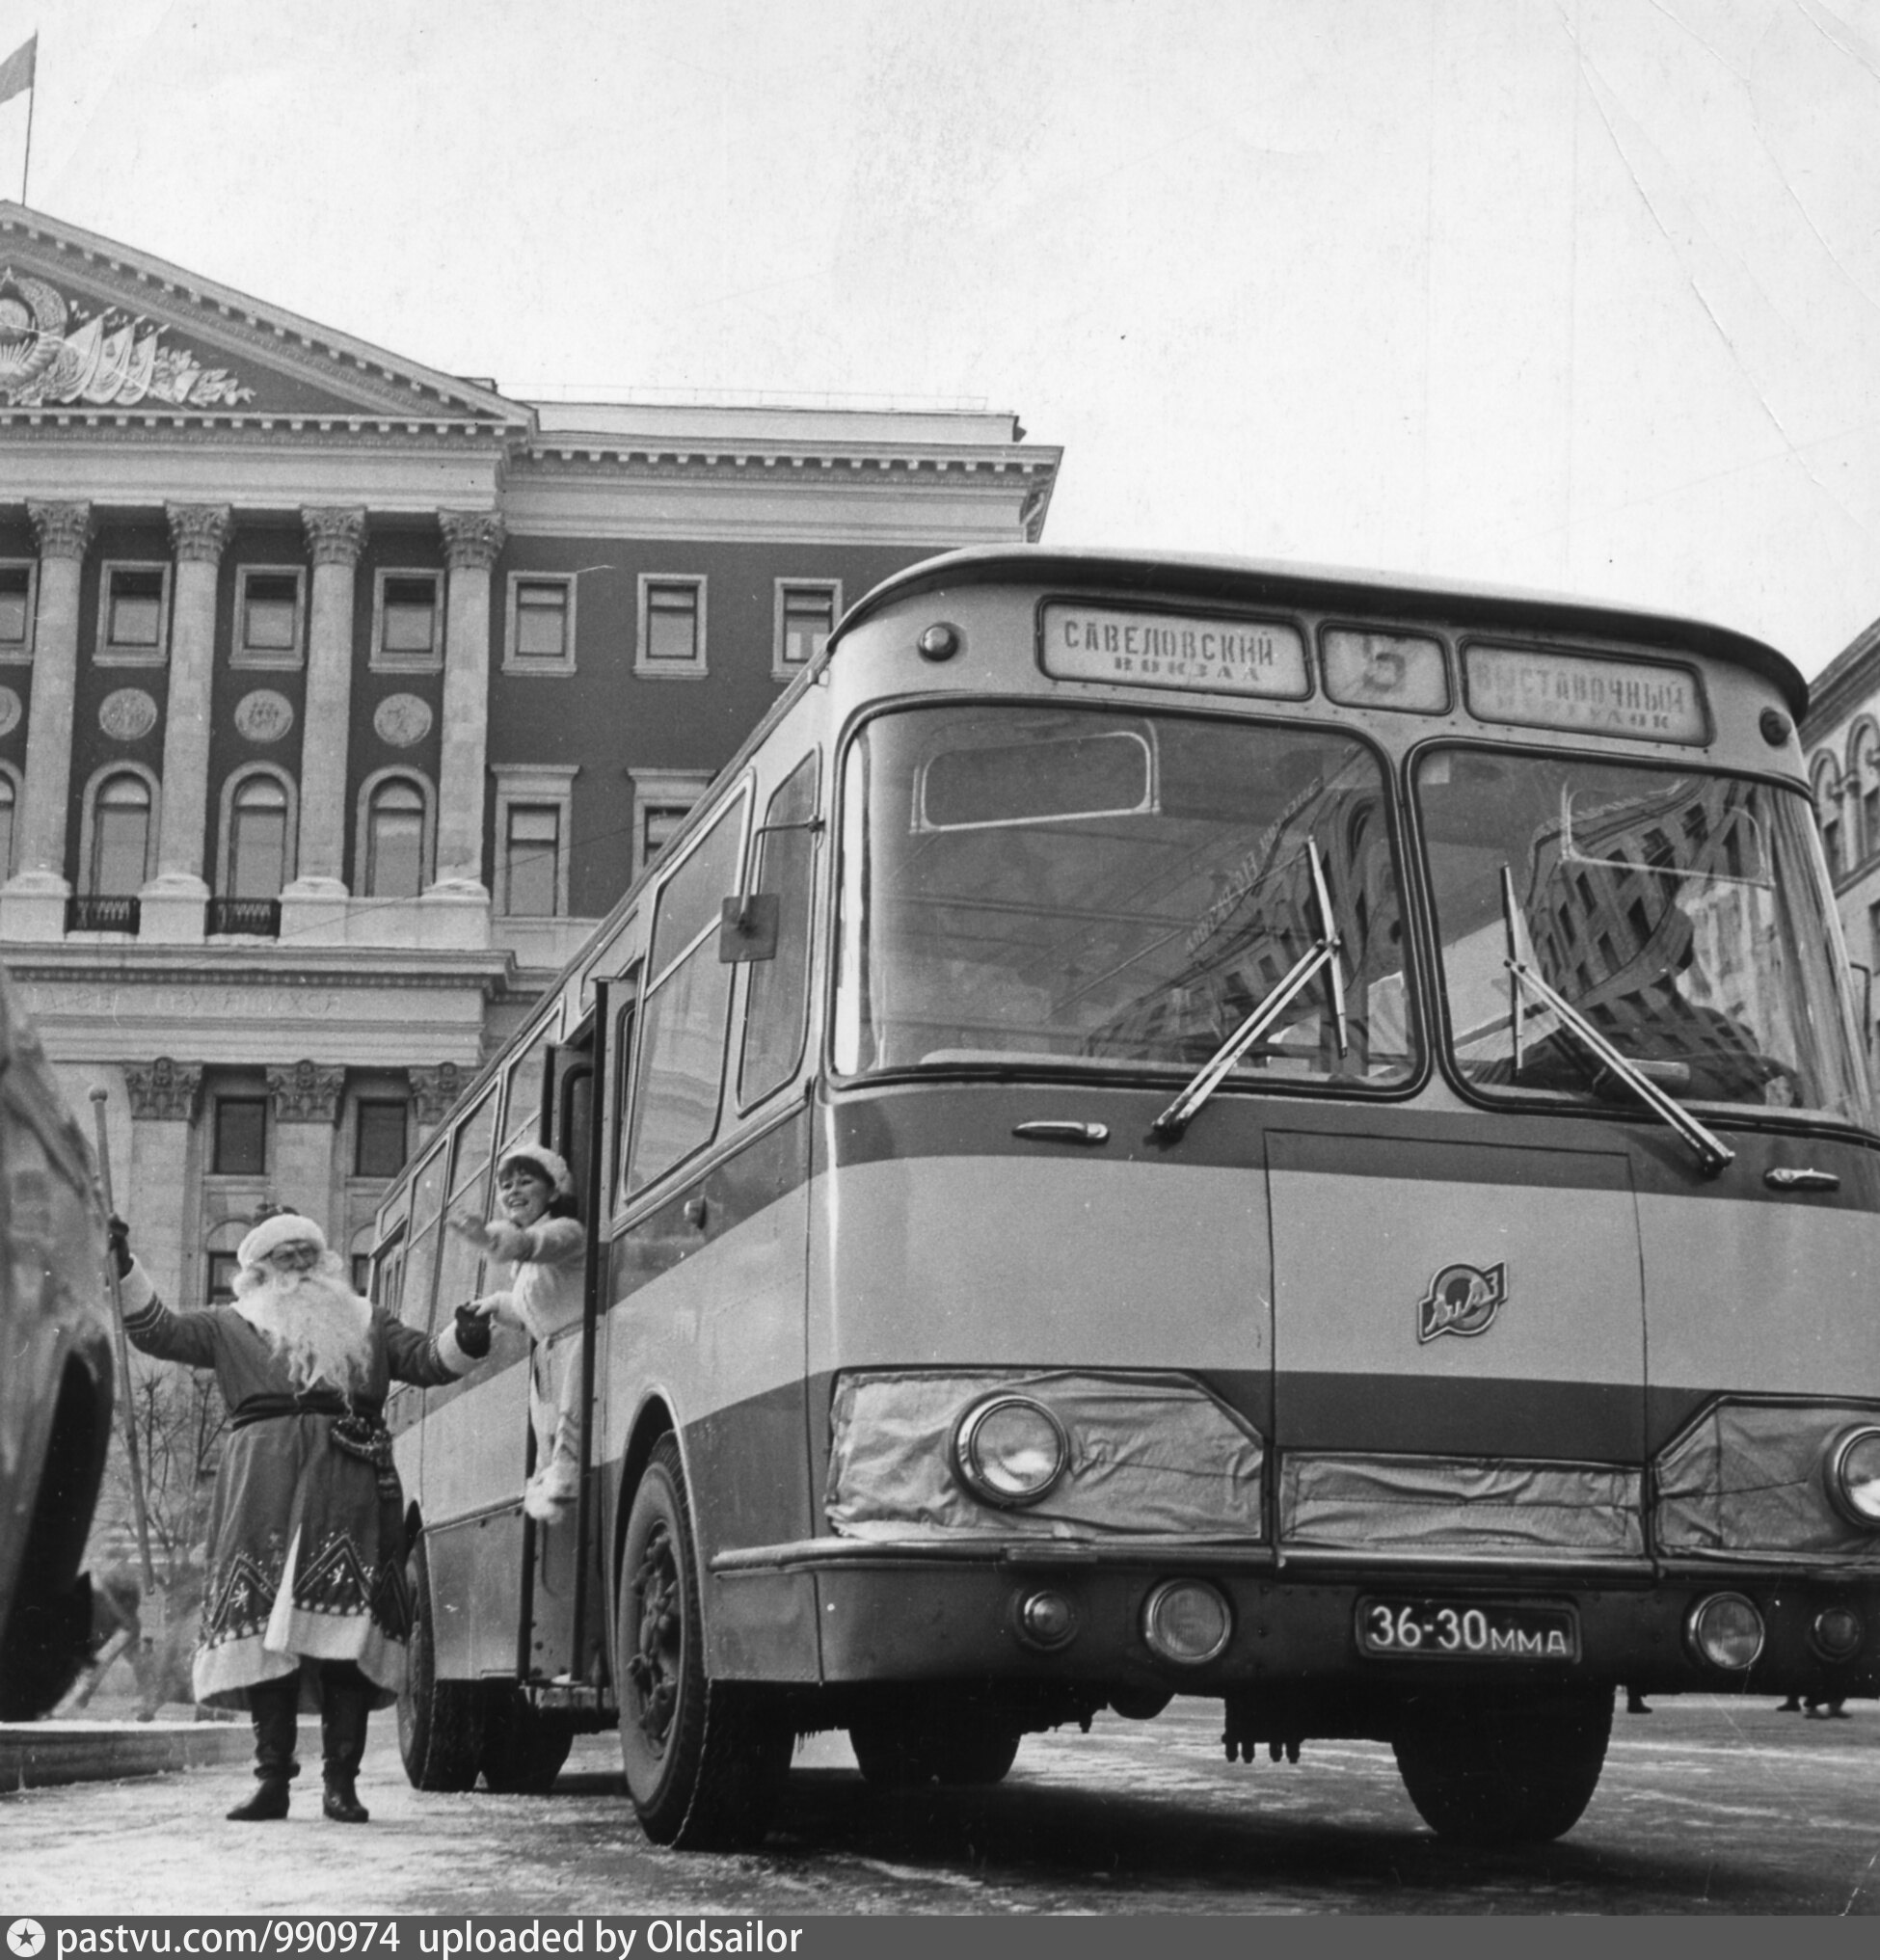 Советский общественный транспорт. ЛИАЗ 677. ЛИАЗ 677 pastvu. ЛИАЗ 677 1969. ЛИАЗ 677 СССР.